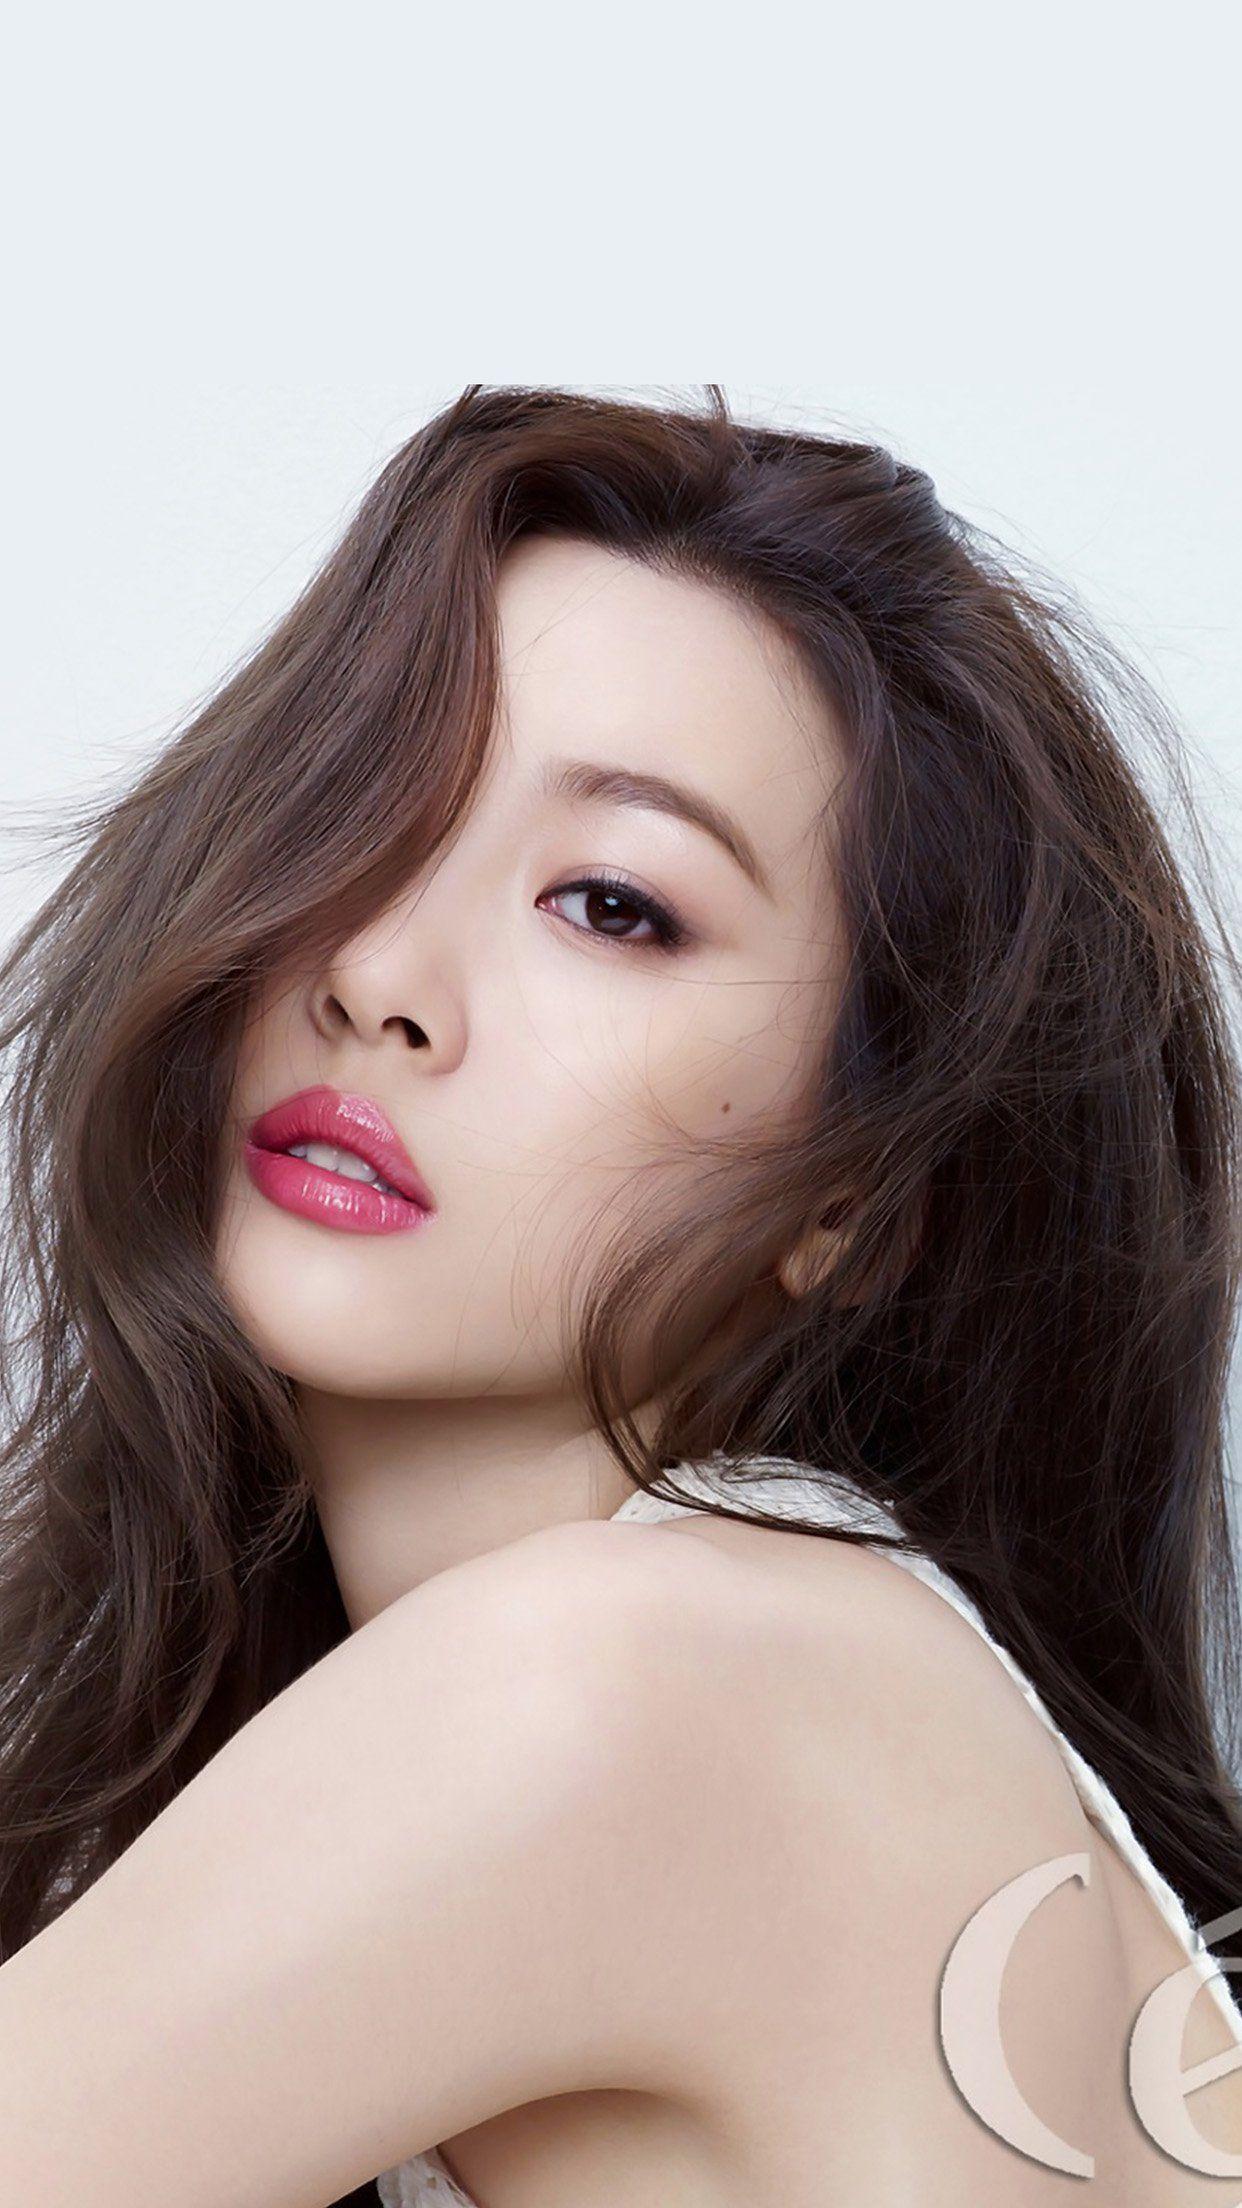 Kpop Jyp Girl White Asian Sunmi Android wallpaper HD